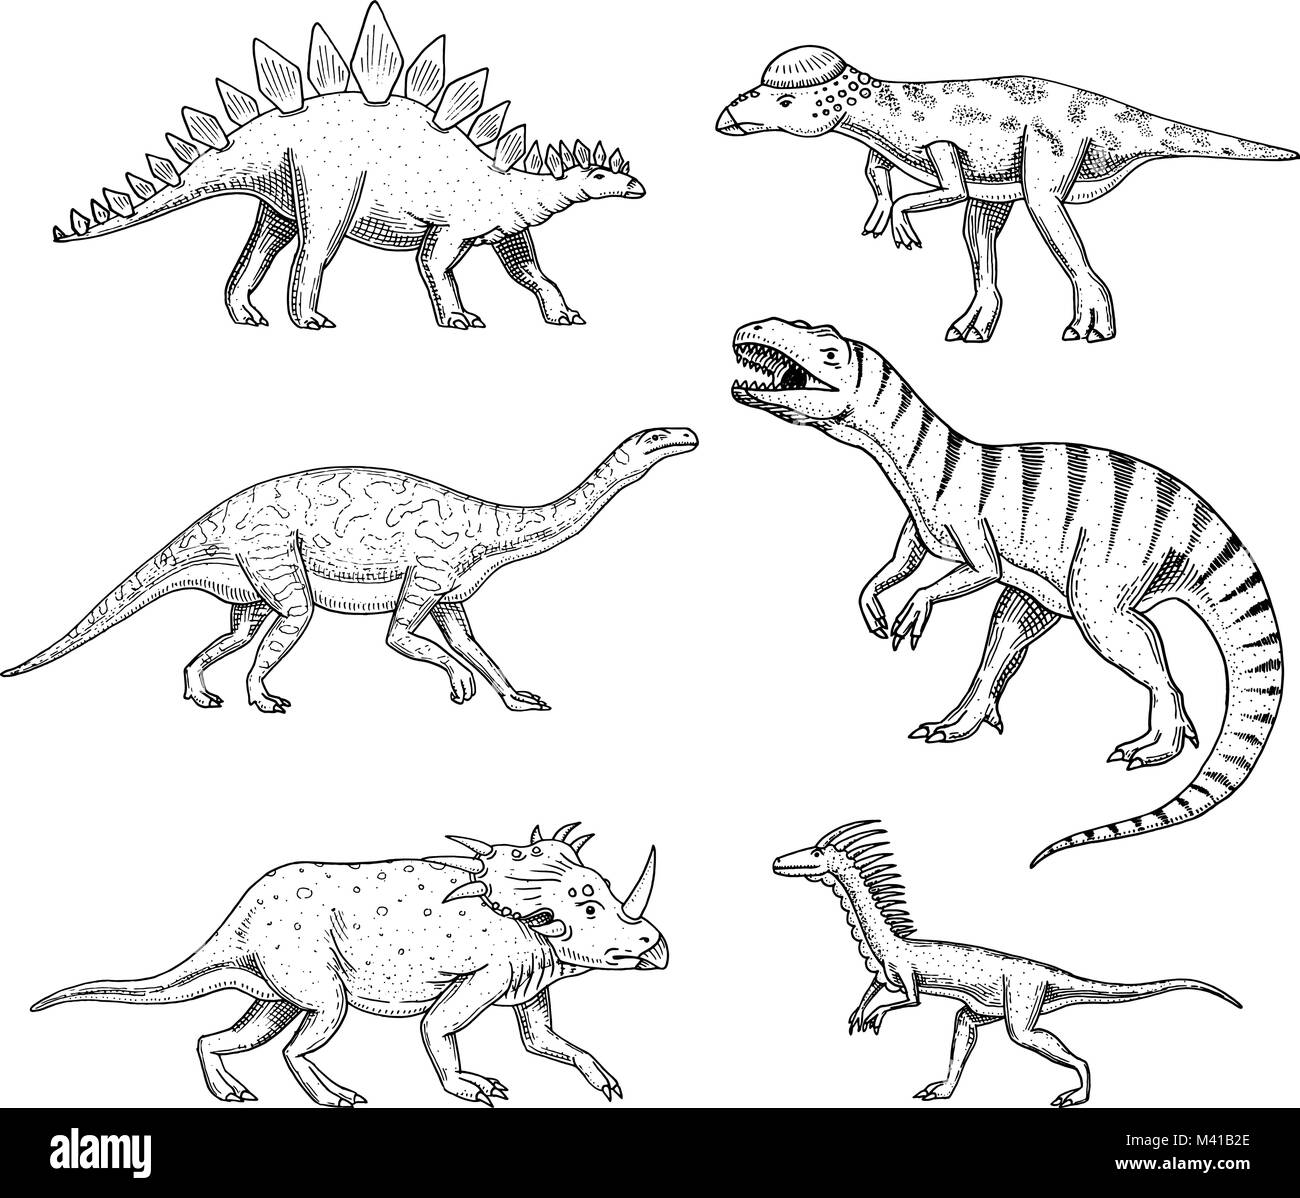 Dinosaurier, Triceratops, Barosaurus, Tyrannosaurus Rex, Stegosaurus, Pachycephalosaurus, deinonychus, Skelette, Fossilien. Prähistorische Reptilien, Tier Hand gezeichnet Vektor. Stock Vektor